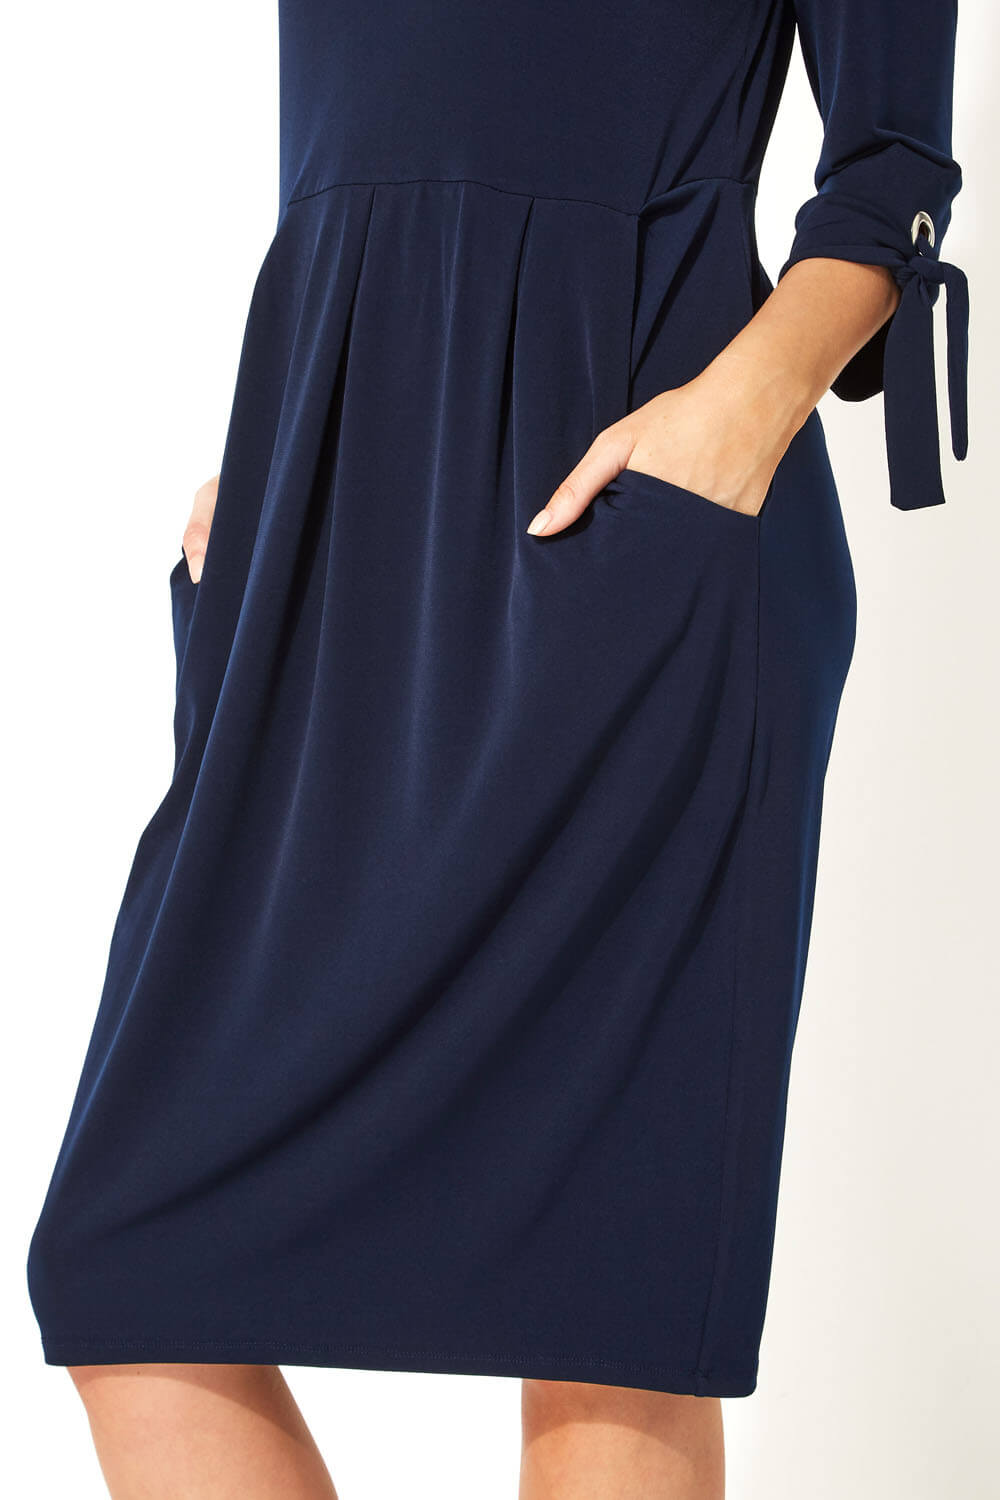 Roman Originals Women's Blue Eyelet Sleeve Jersey Dress Sizes 10-20 